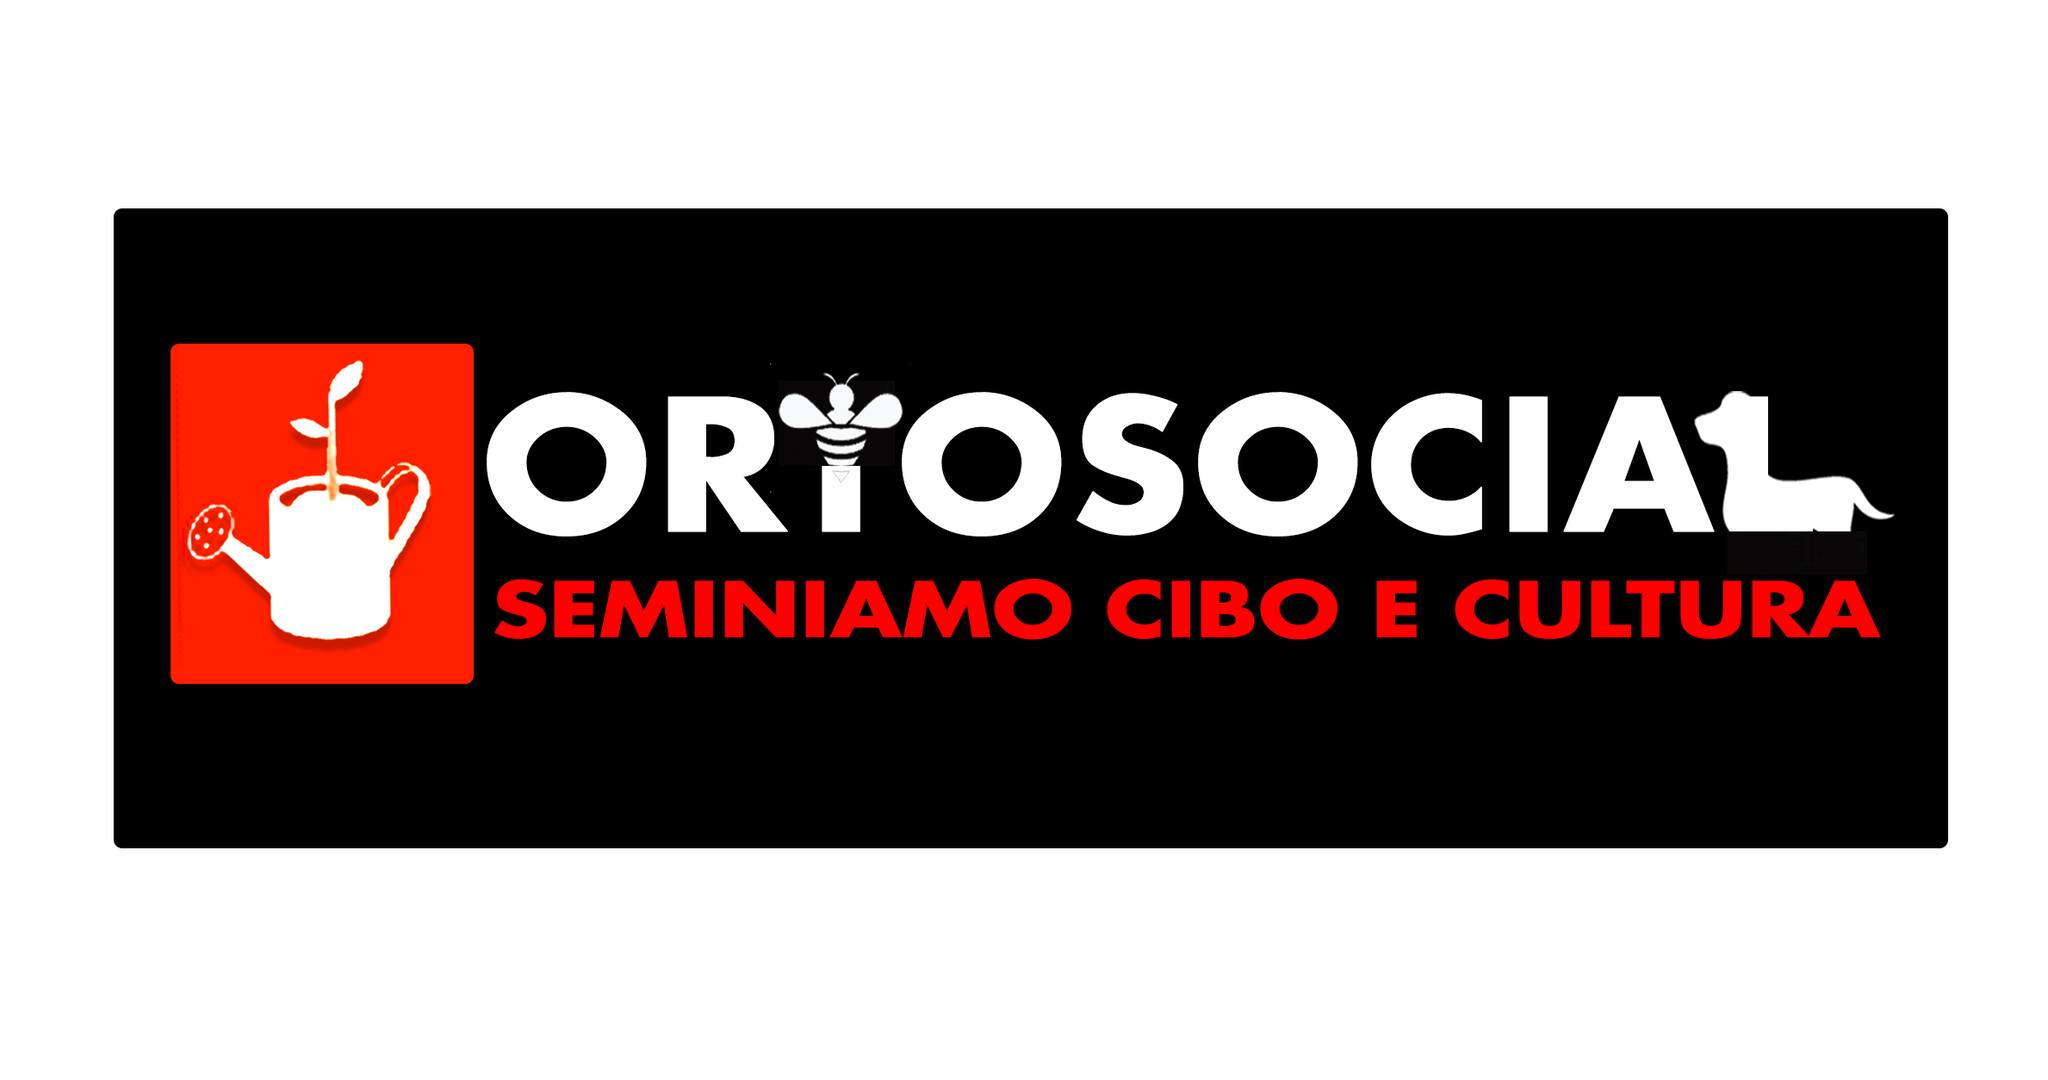 OrtoSocial